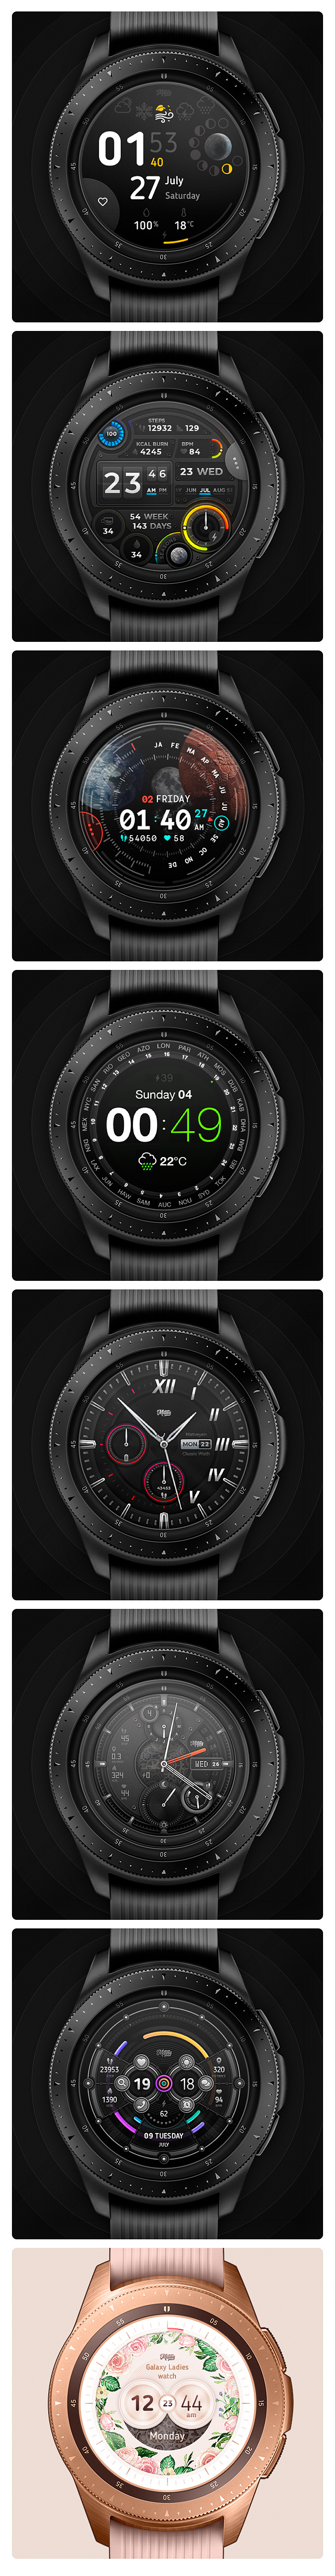 Sales at the Galaxy Store after 21 days. - My, Samsung galaxy Watch, Clock, Watchface, Clock face, Design, Business, W3bsit3-dns.com, Гаджеты, Longpost